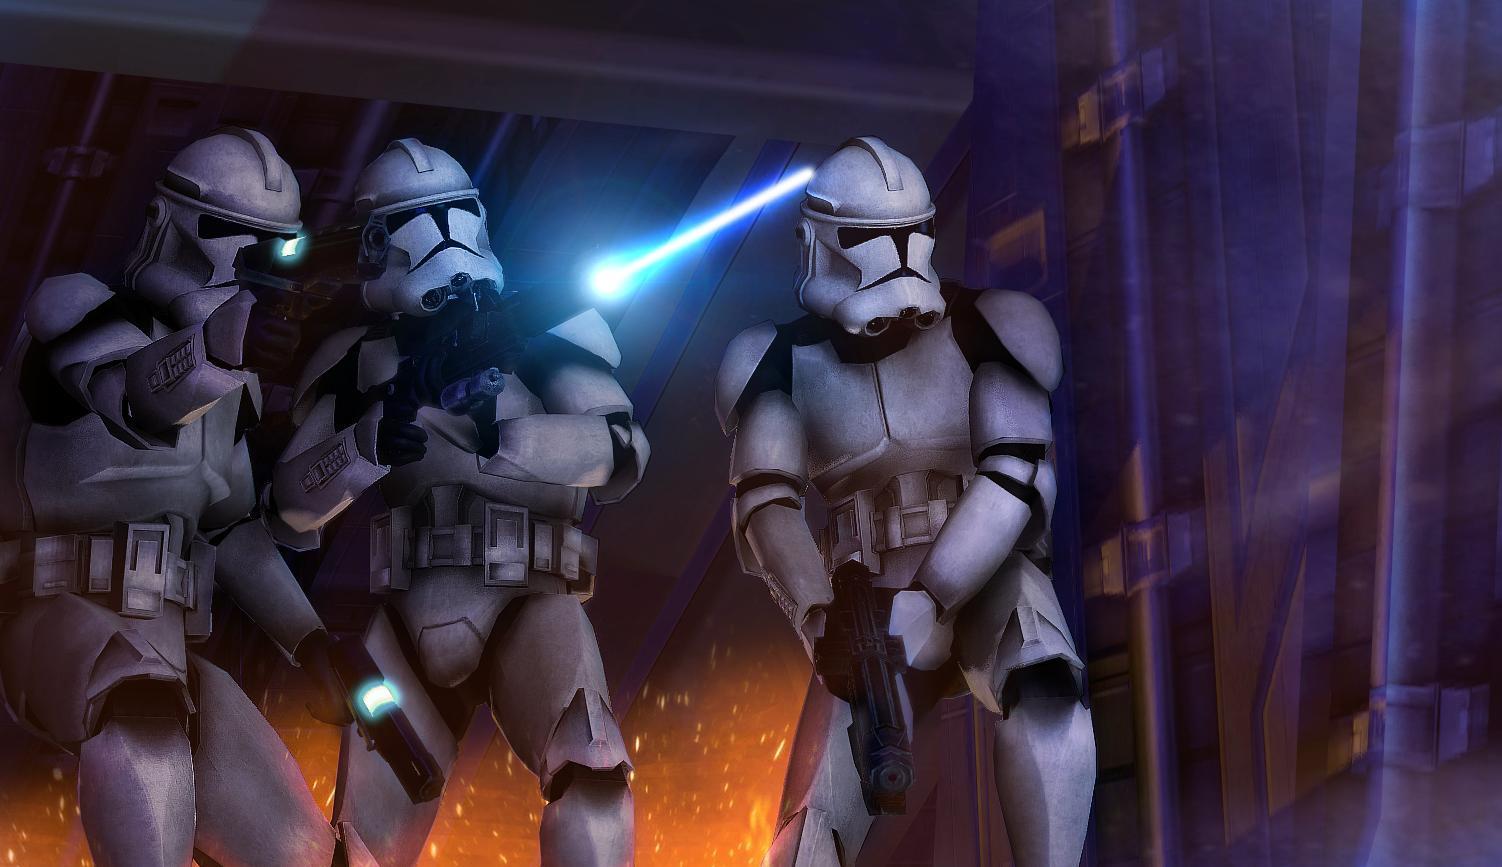 image For > Clone Trooper Battle Wallpaper